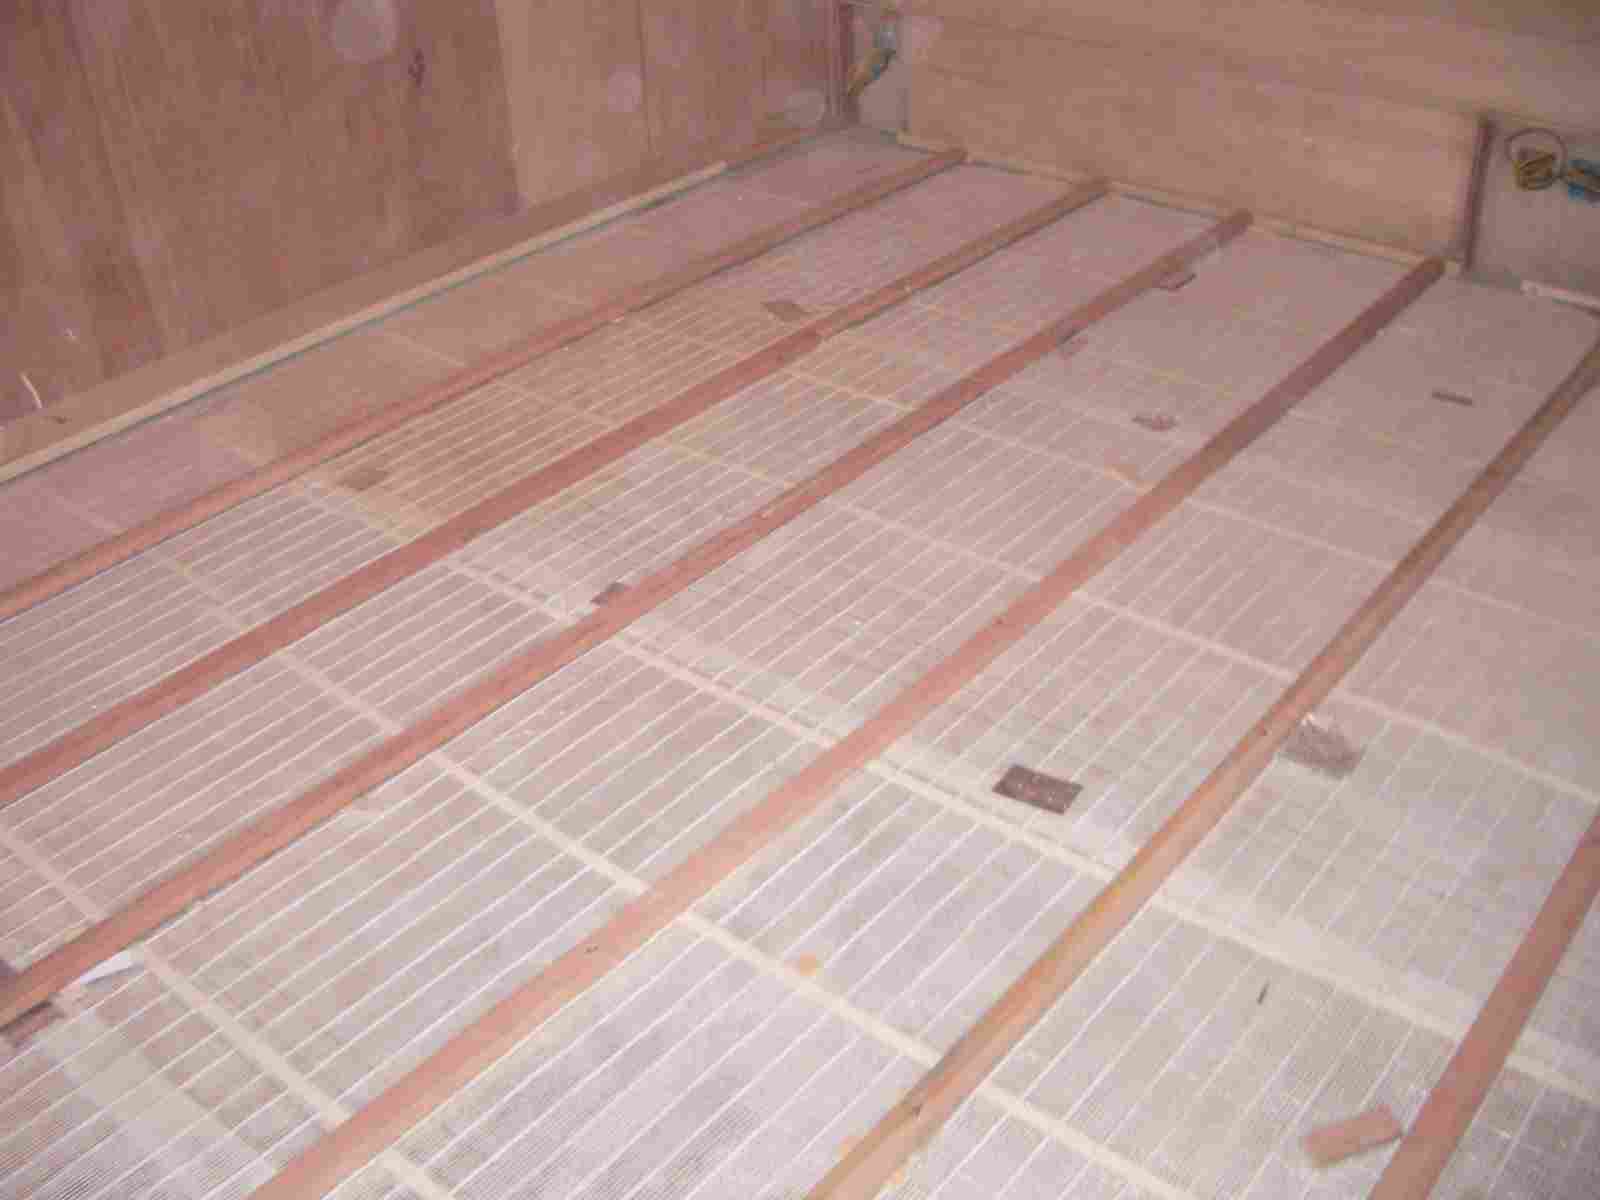 heating system, under floor warming, heated floor, heating mat, heating cable, heting elements